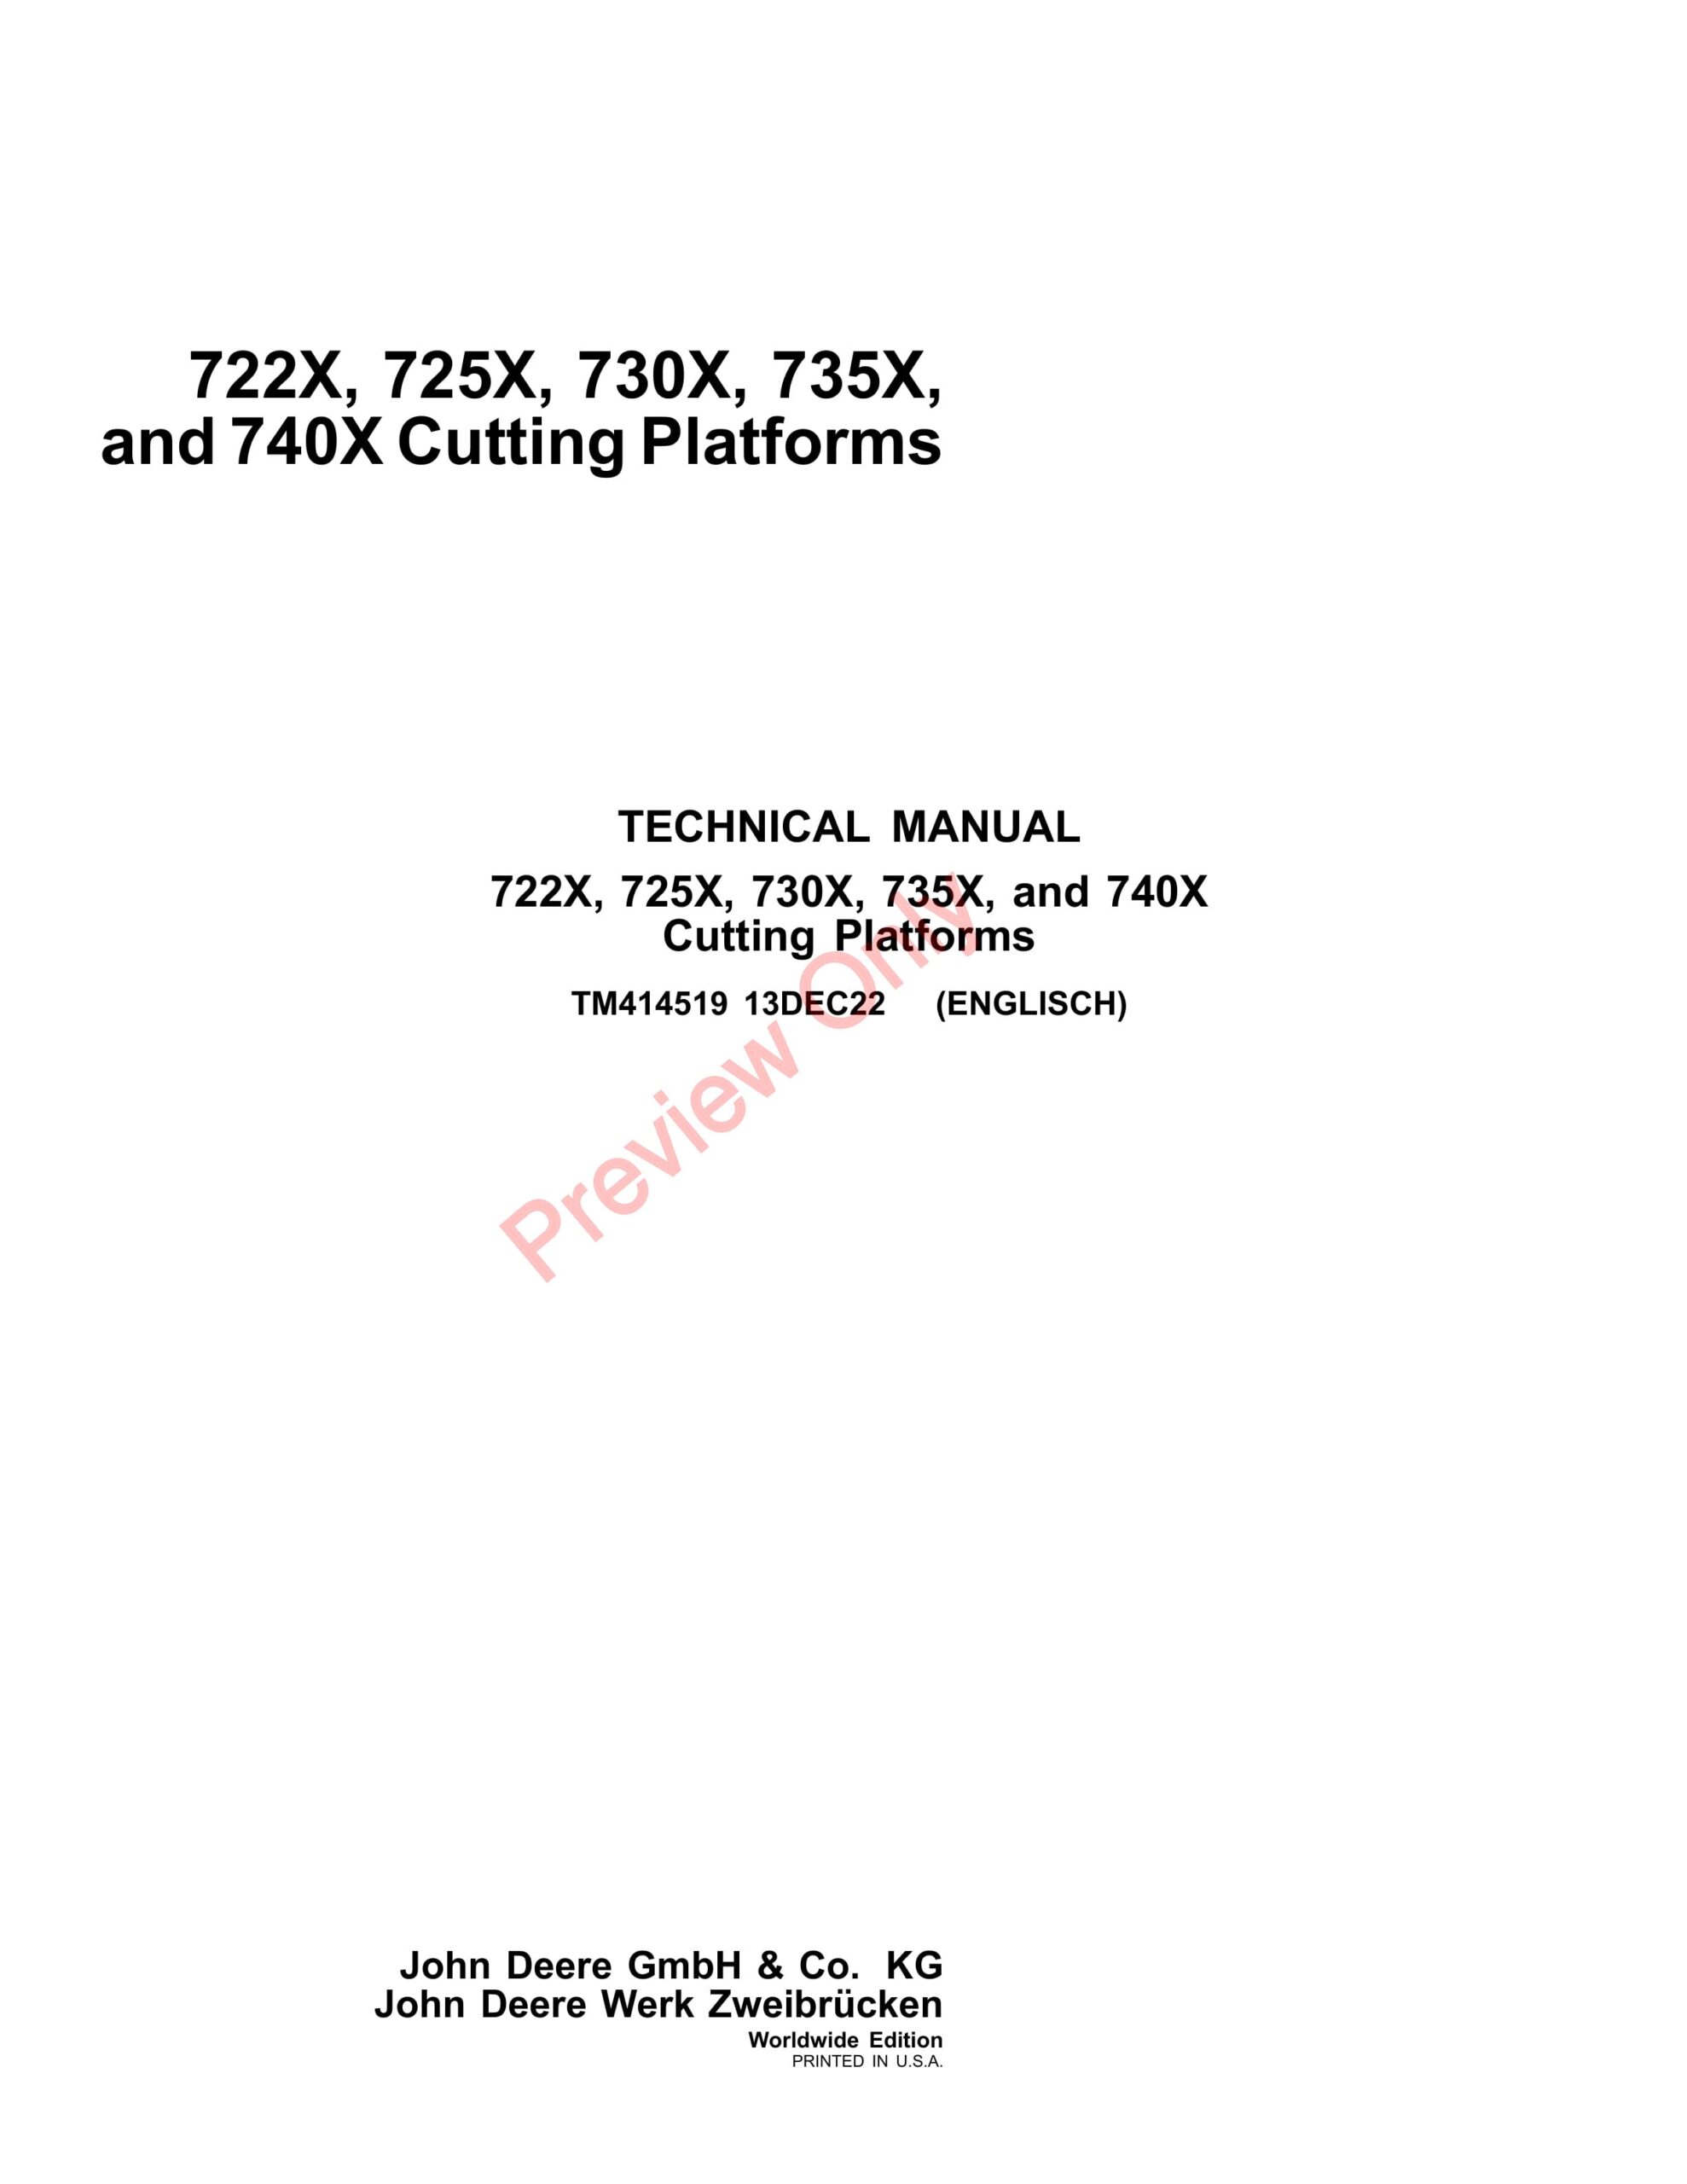 John Deere 722X, 725X, 730X, 735X, and 740X Cutting Platforms, (062000 Technical Manual TM414519 13DEC22-1